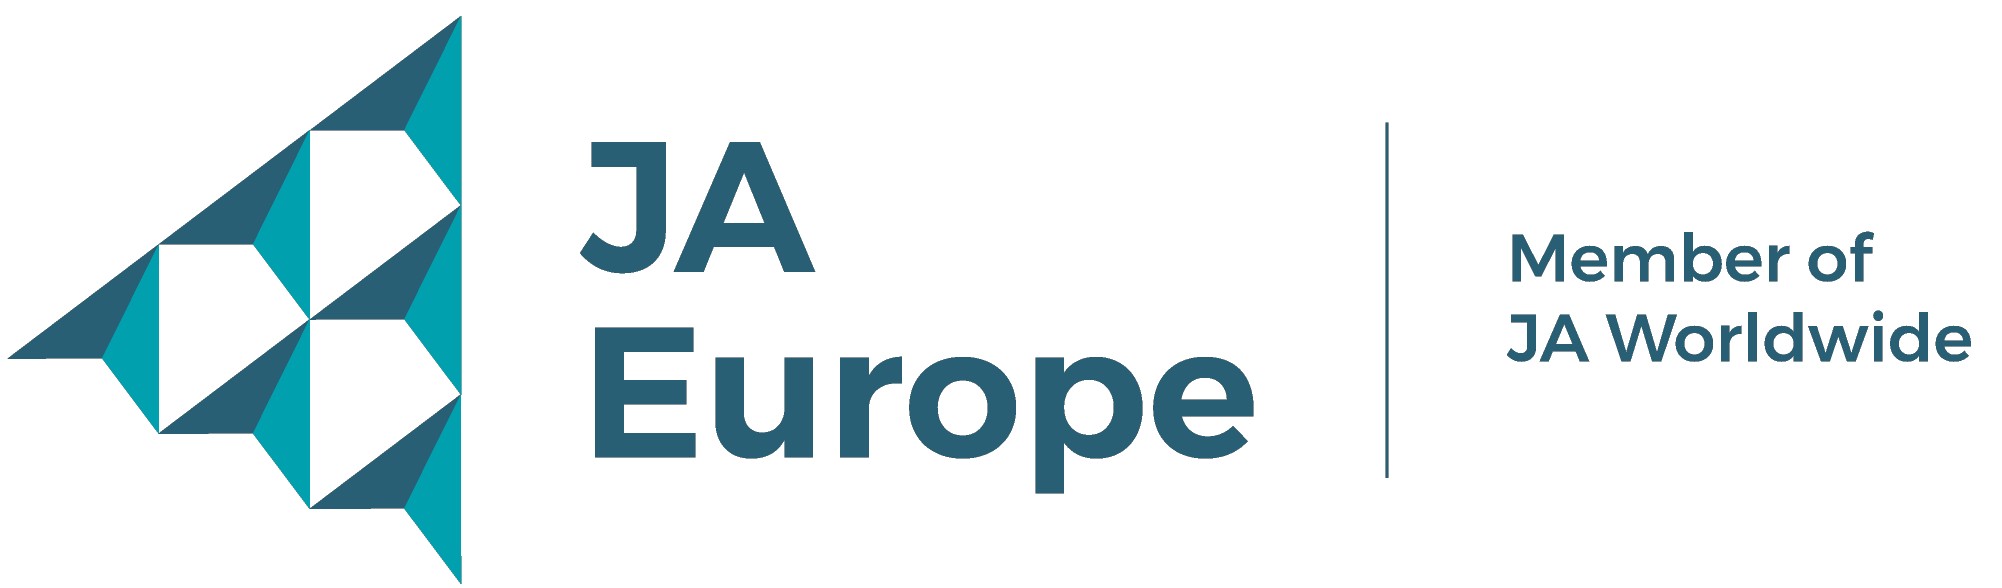 JA Europe - Donation